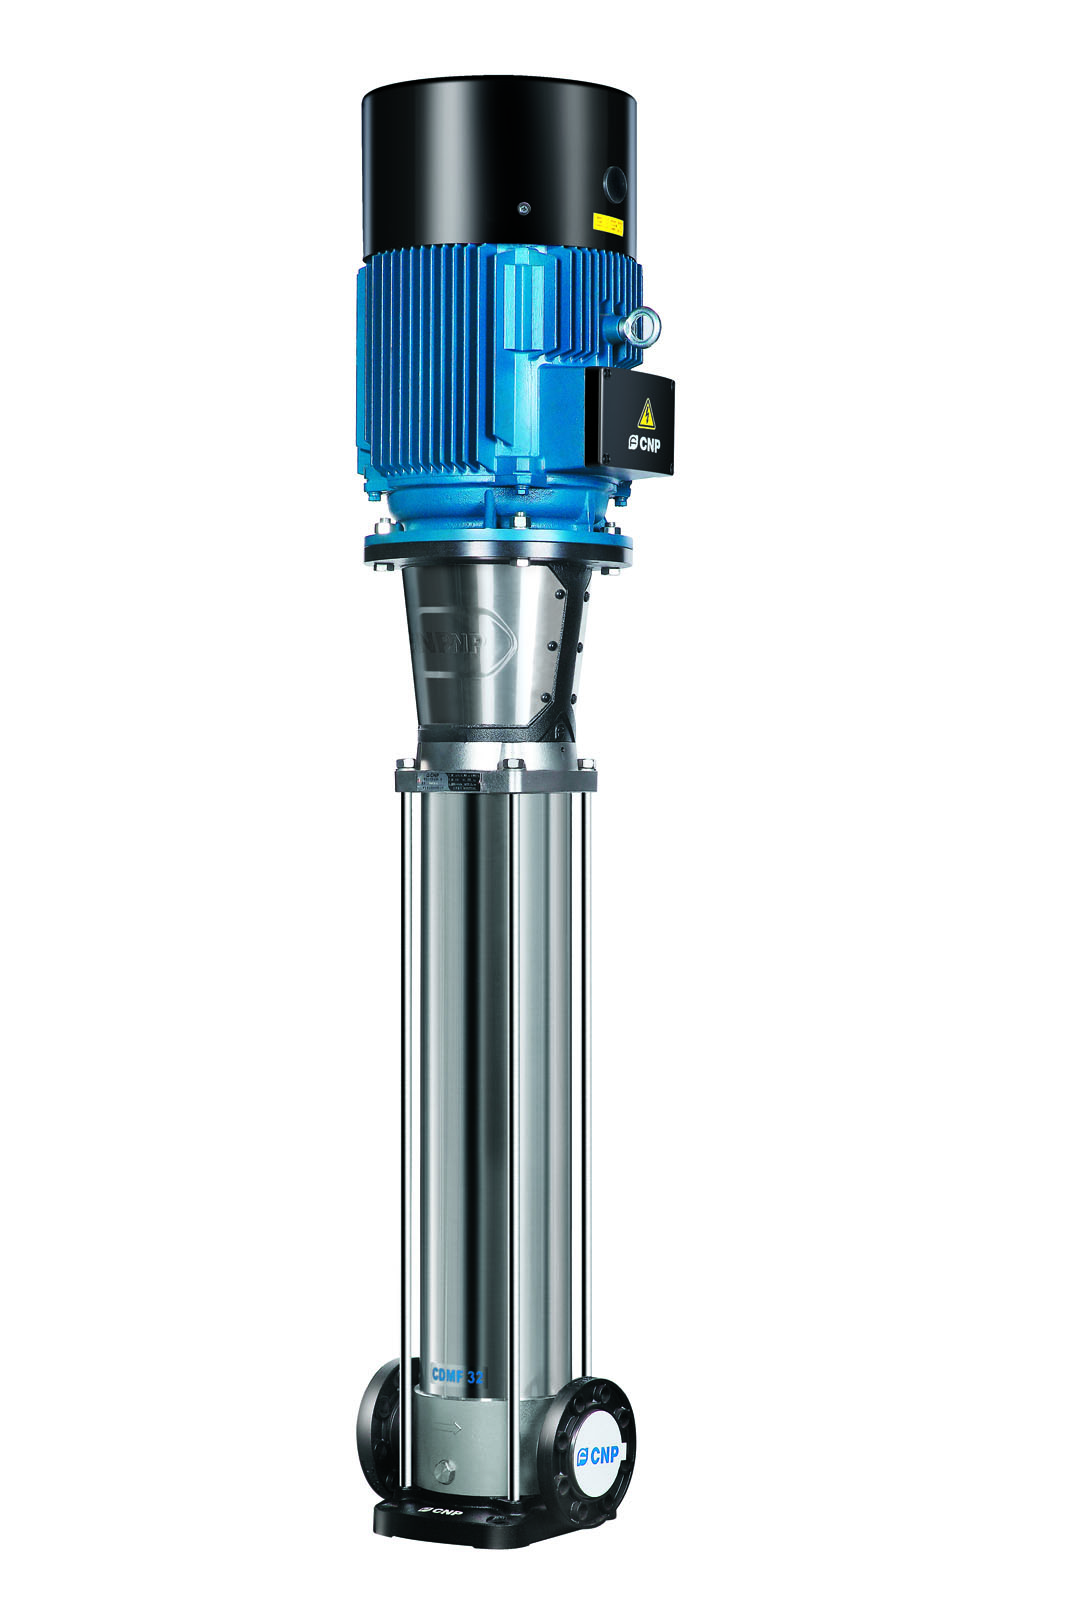 CDM CDMF High efficient Light Vertical Multistage Centrifugal Pump